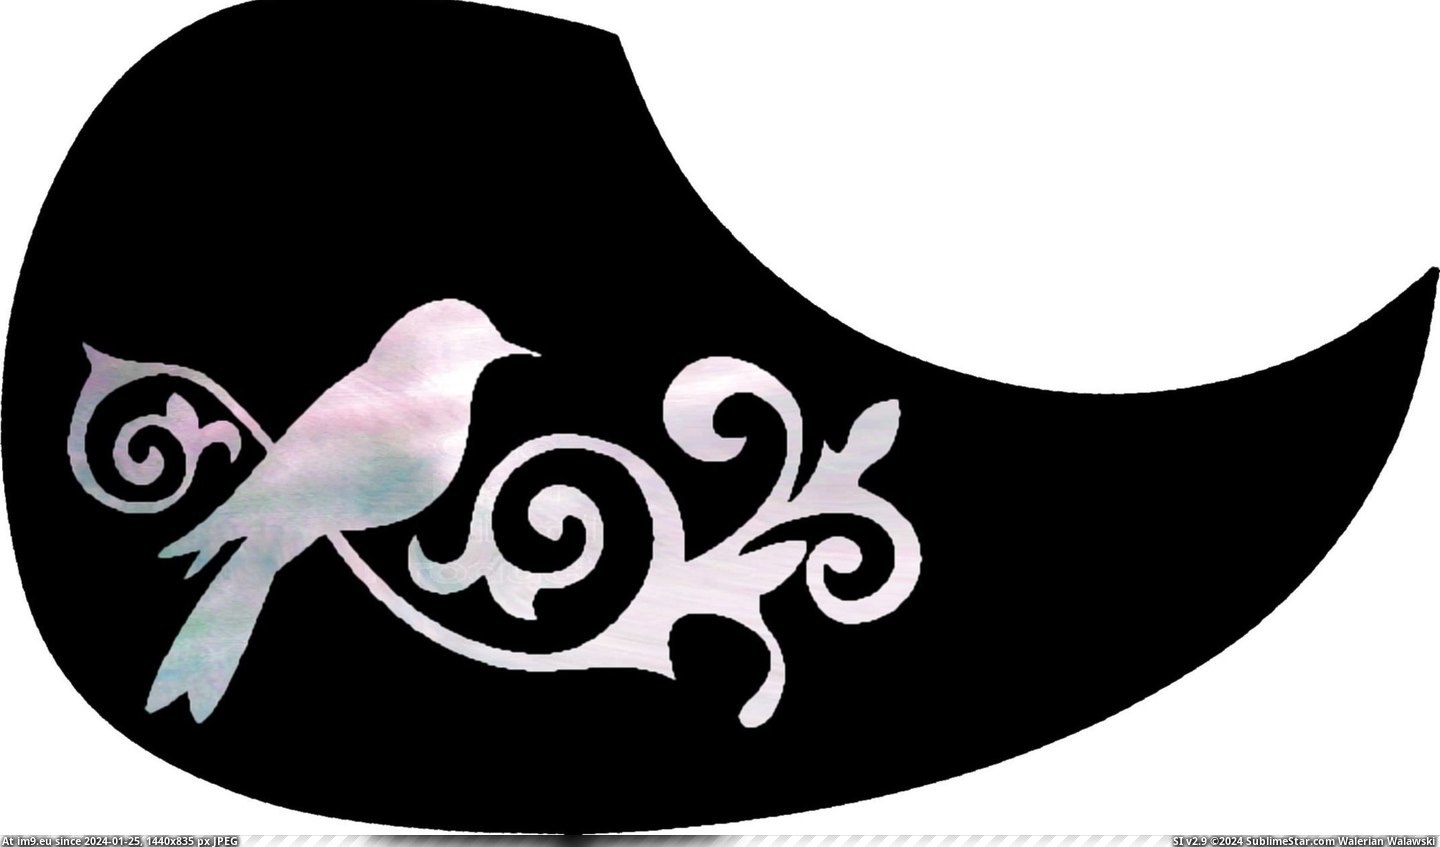 #Pick #Bird #Song #Guard #Pearl Pick Guard - Pearl Song Bird Pic. (Изображение из альбом Custom Pickguard Art))